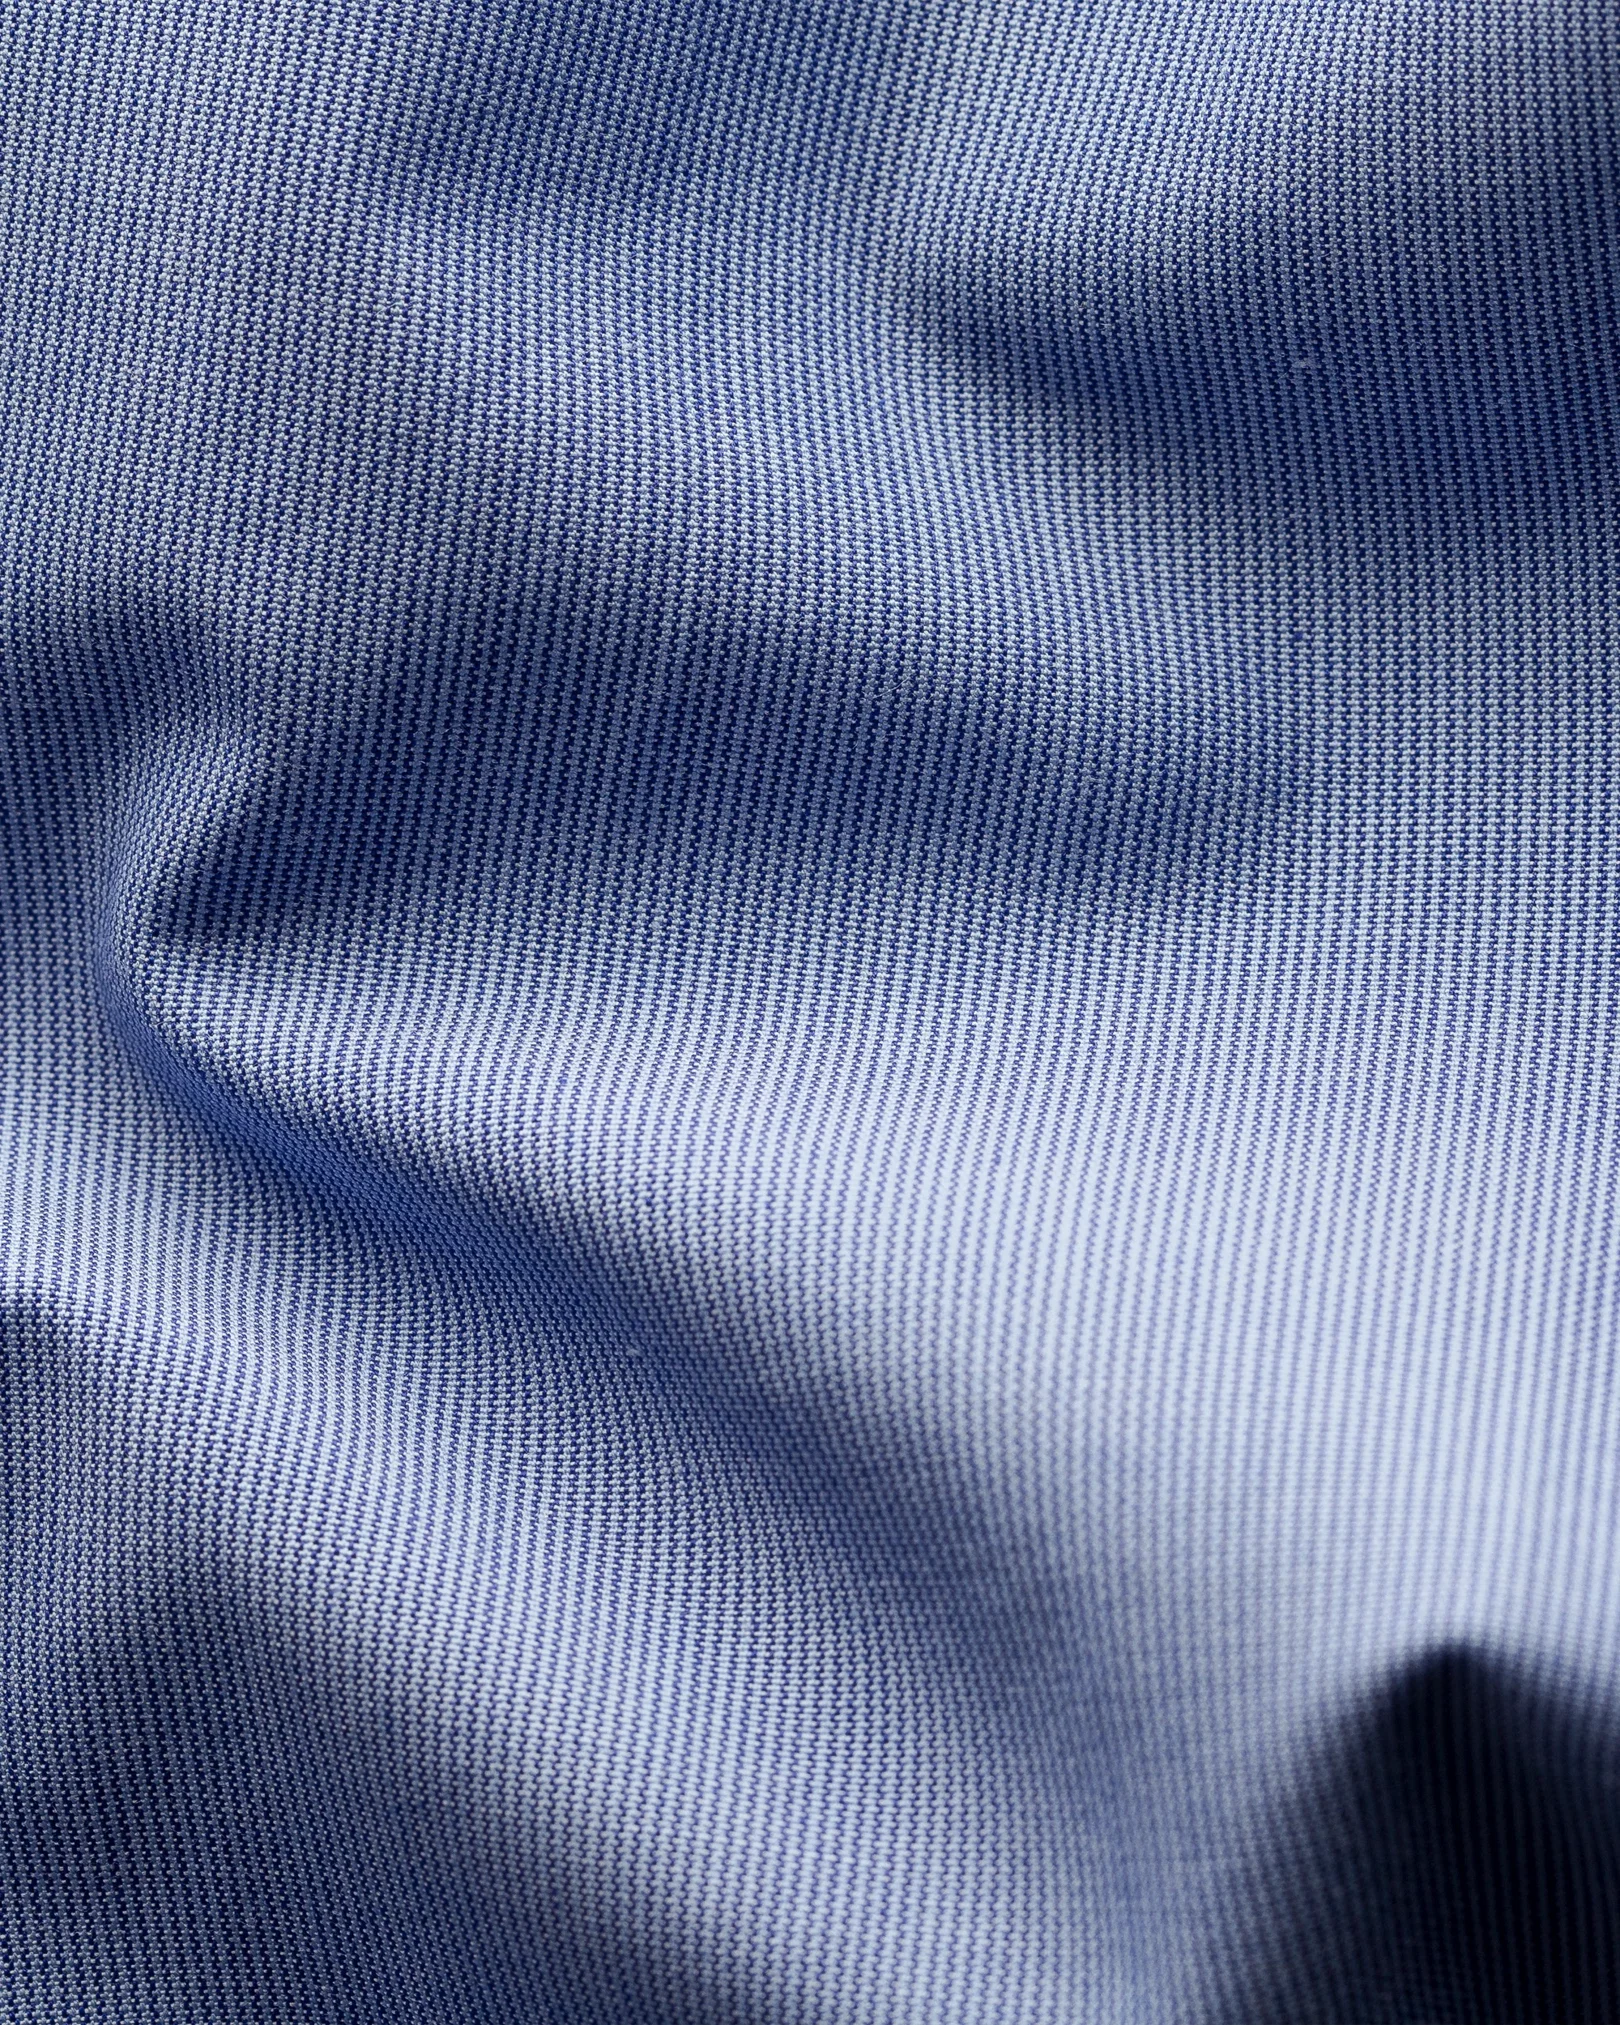 Eton - blue hairline striped shirt navy details extreme cut away